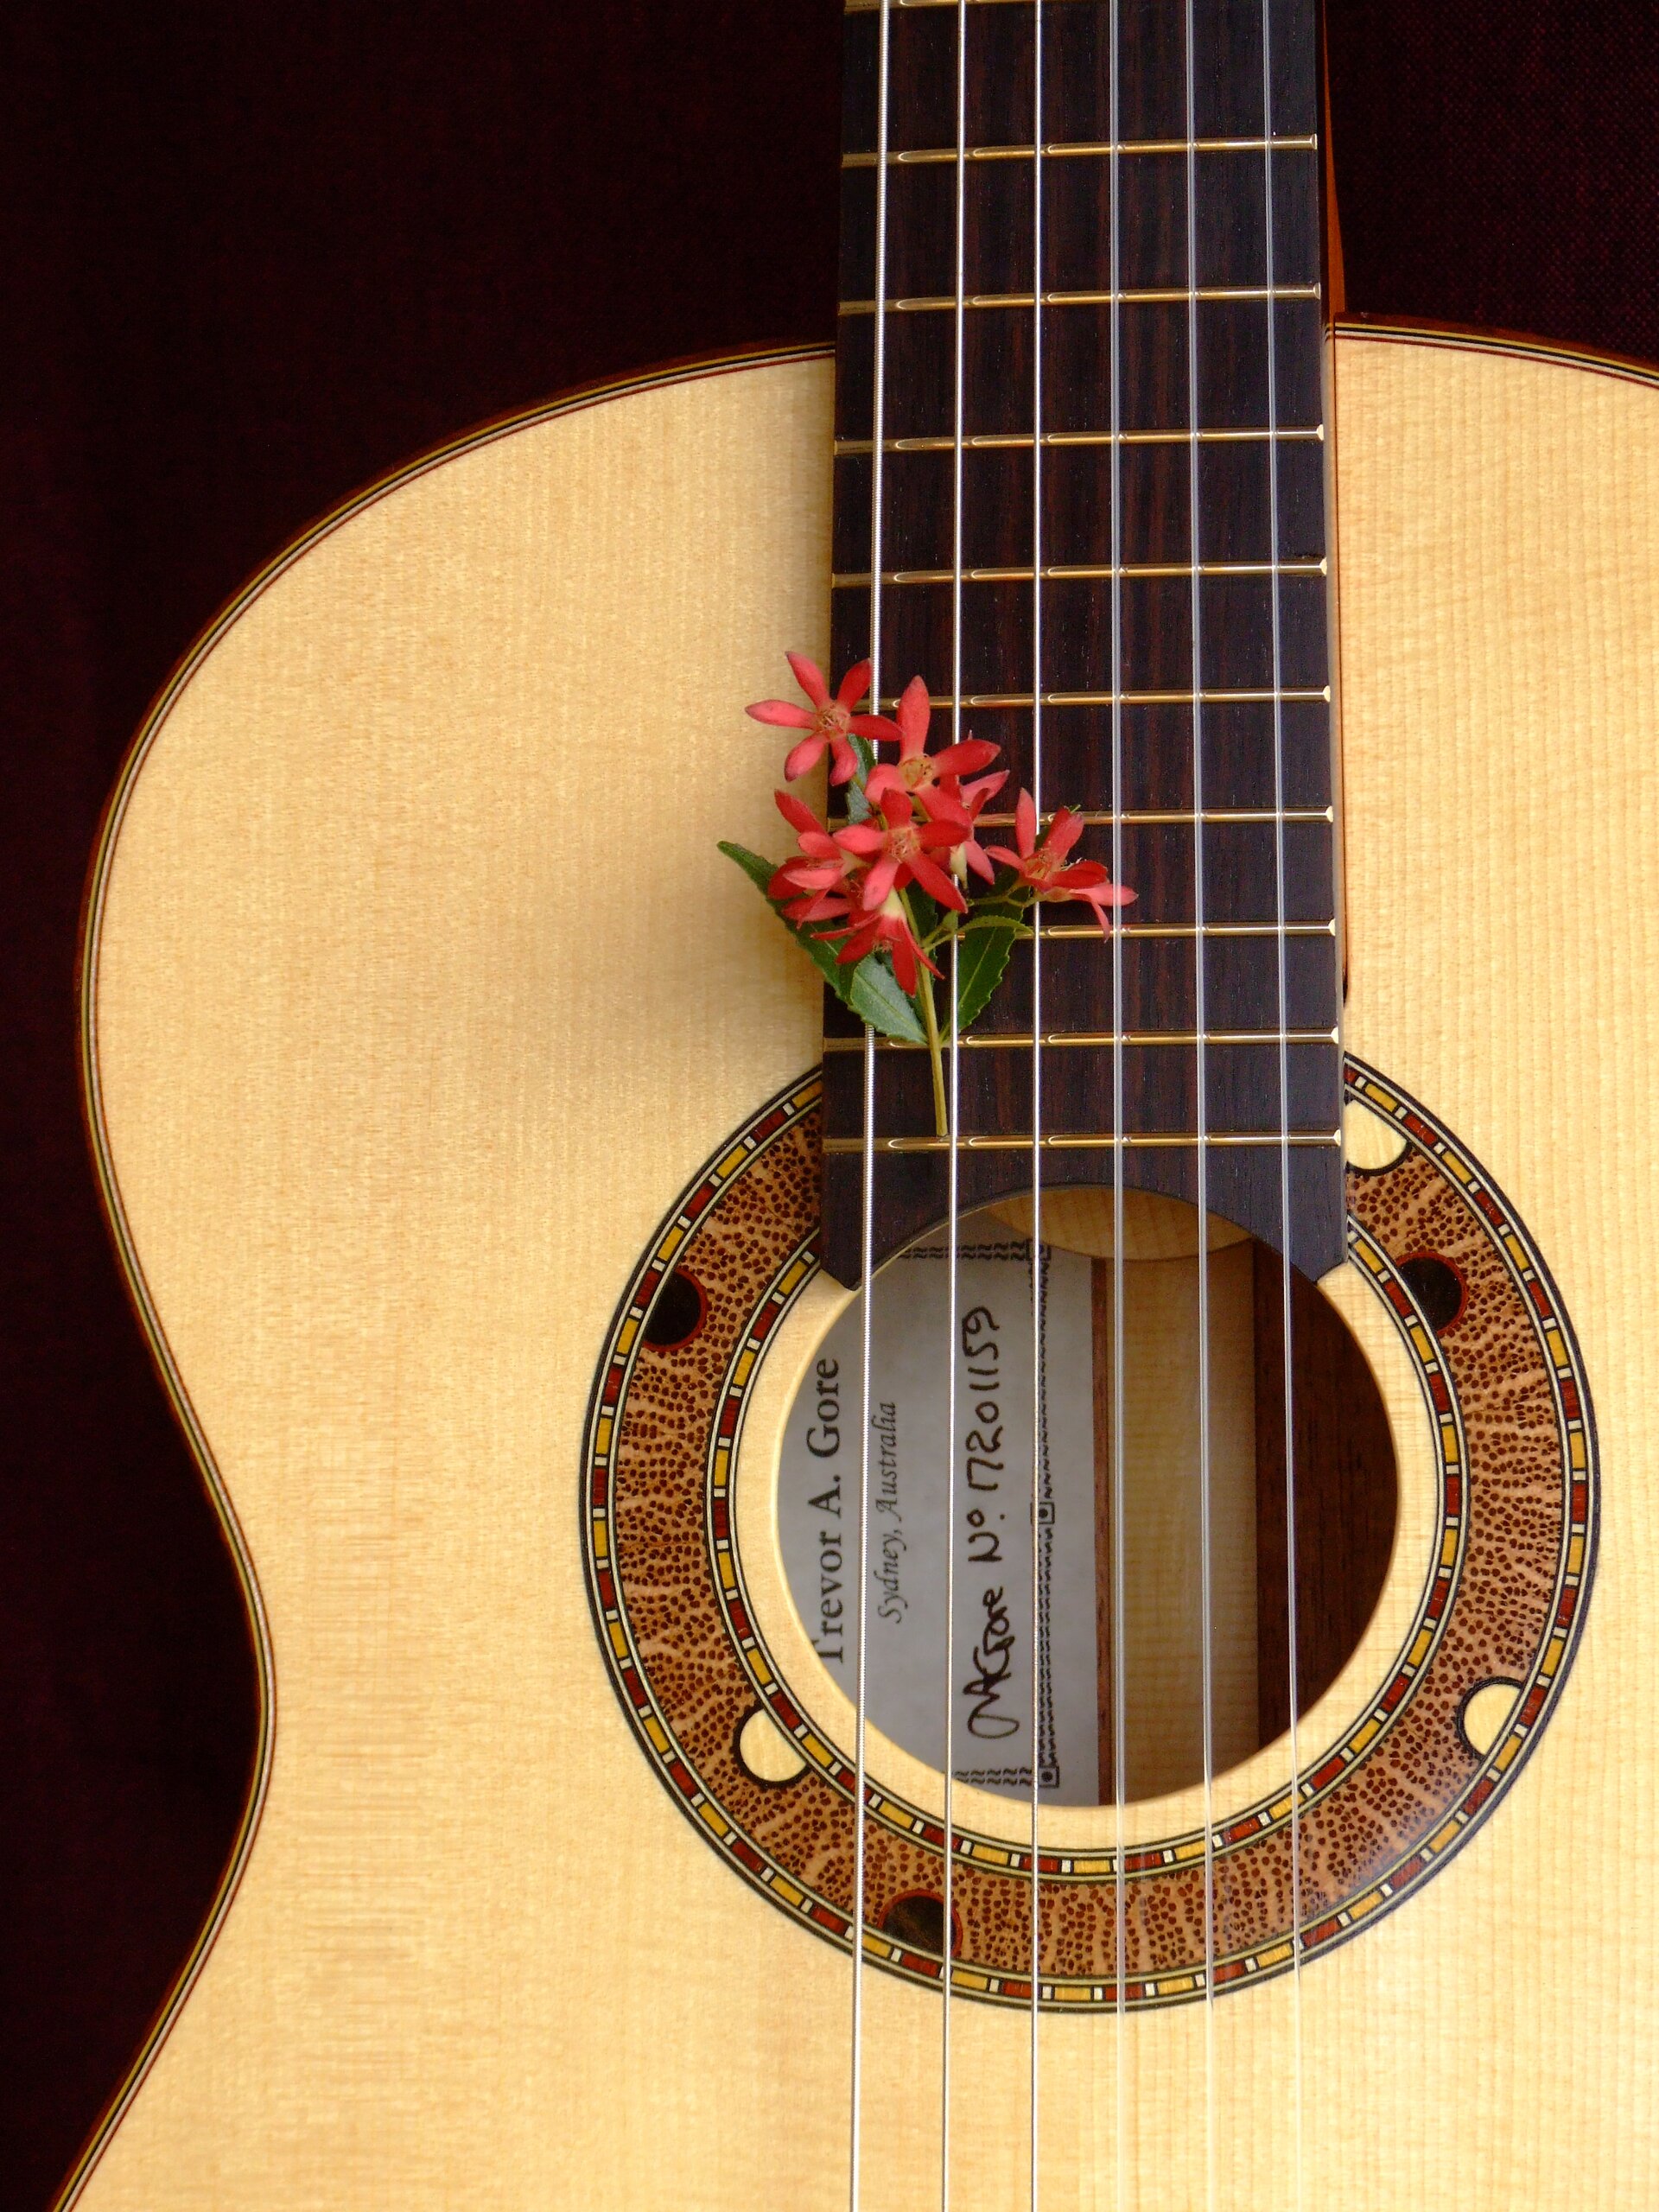 Australiana rosette in a spuce topped tilt-neck classical guitar with Christmas flower